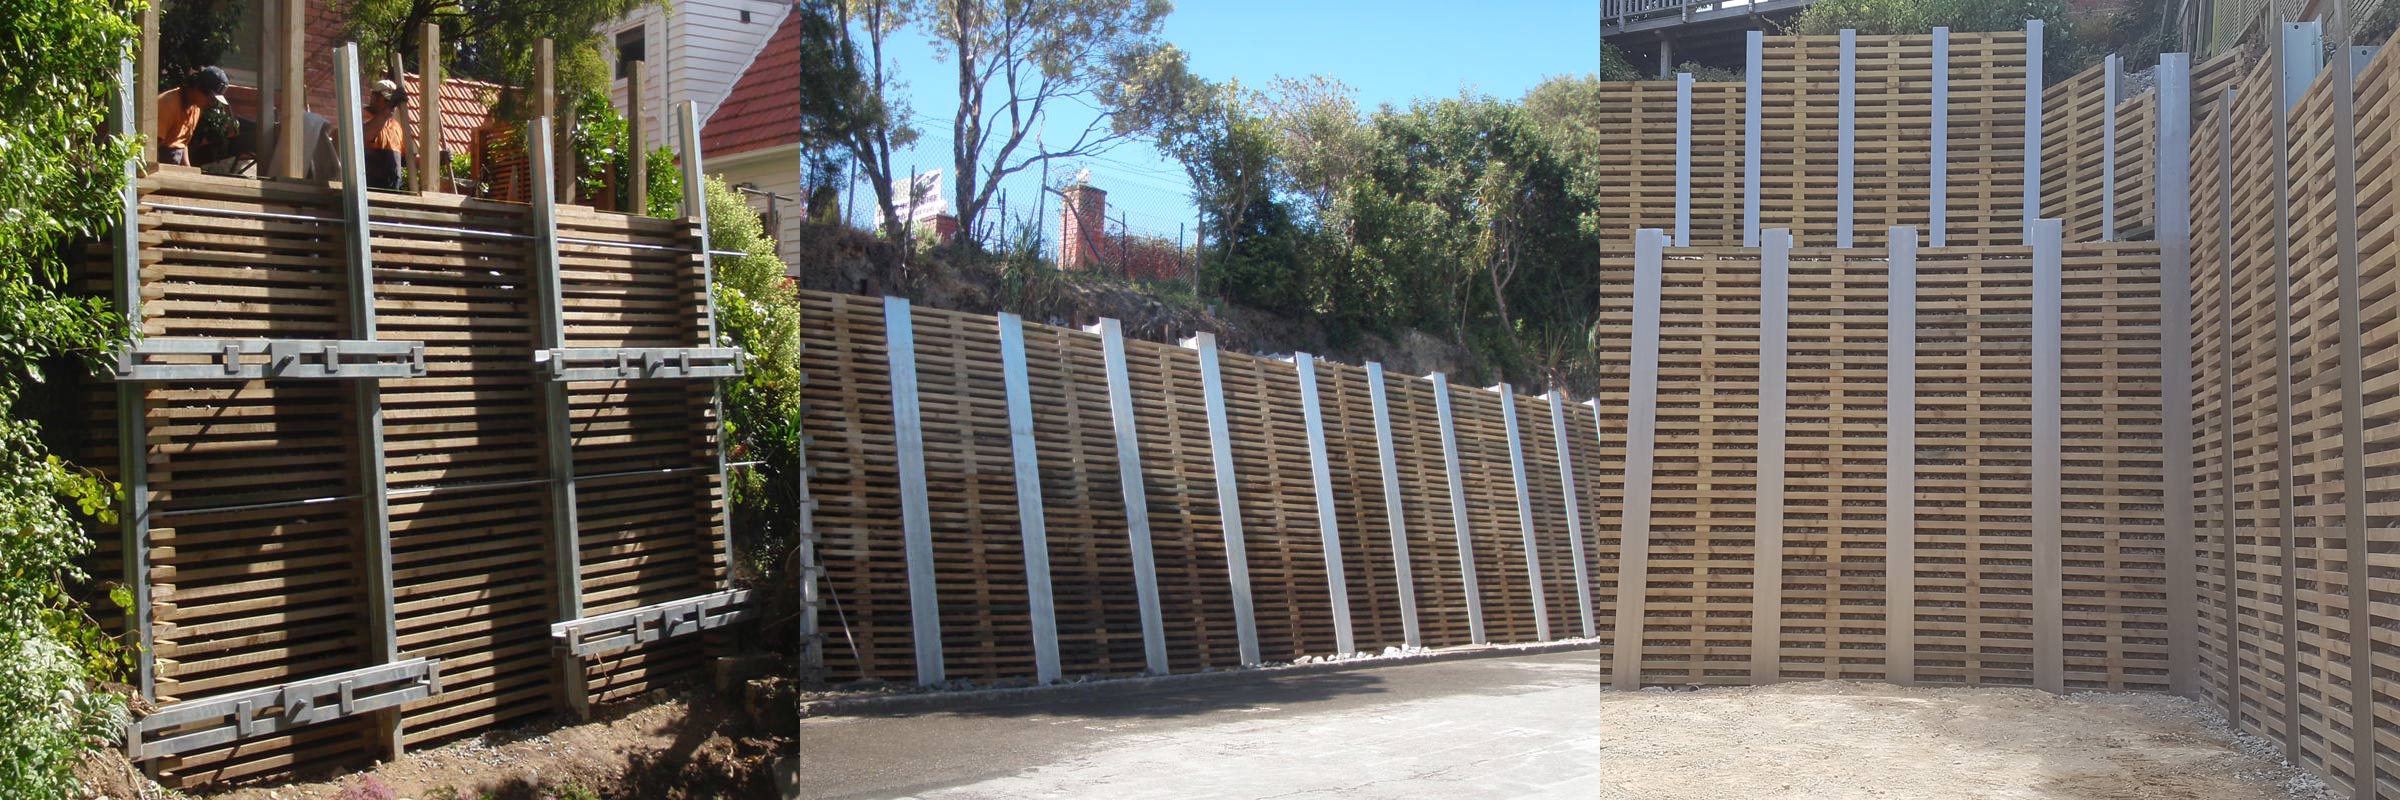 Steel retaining walls